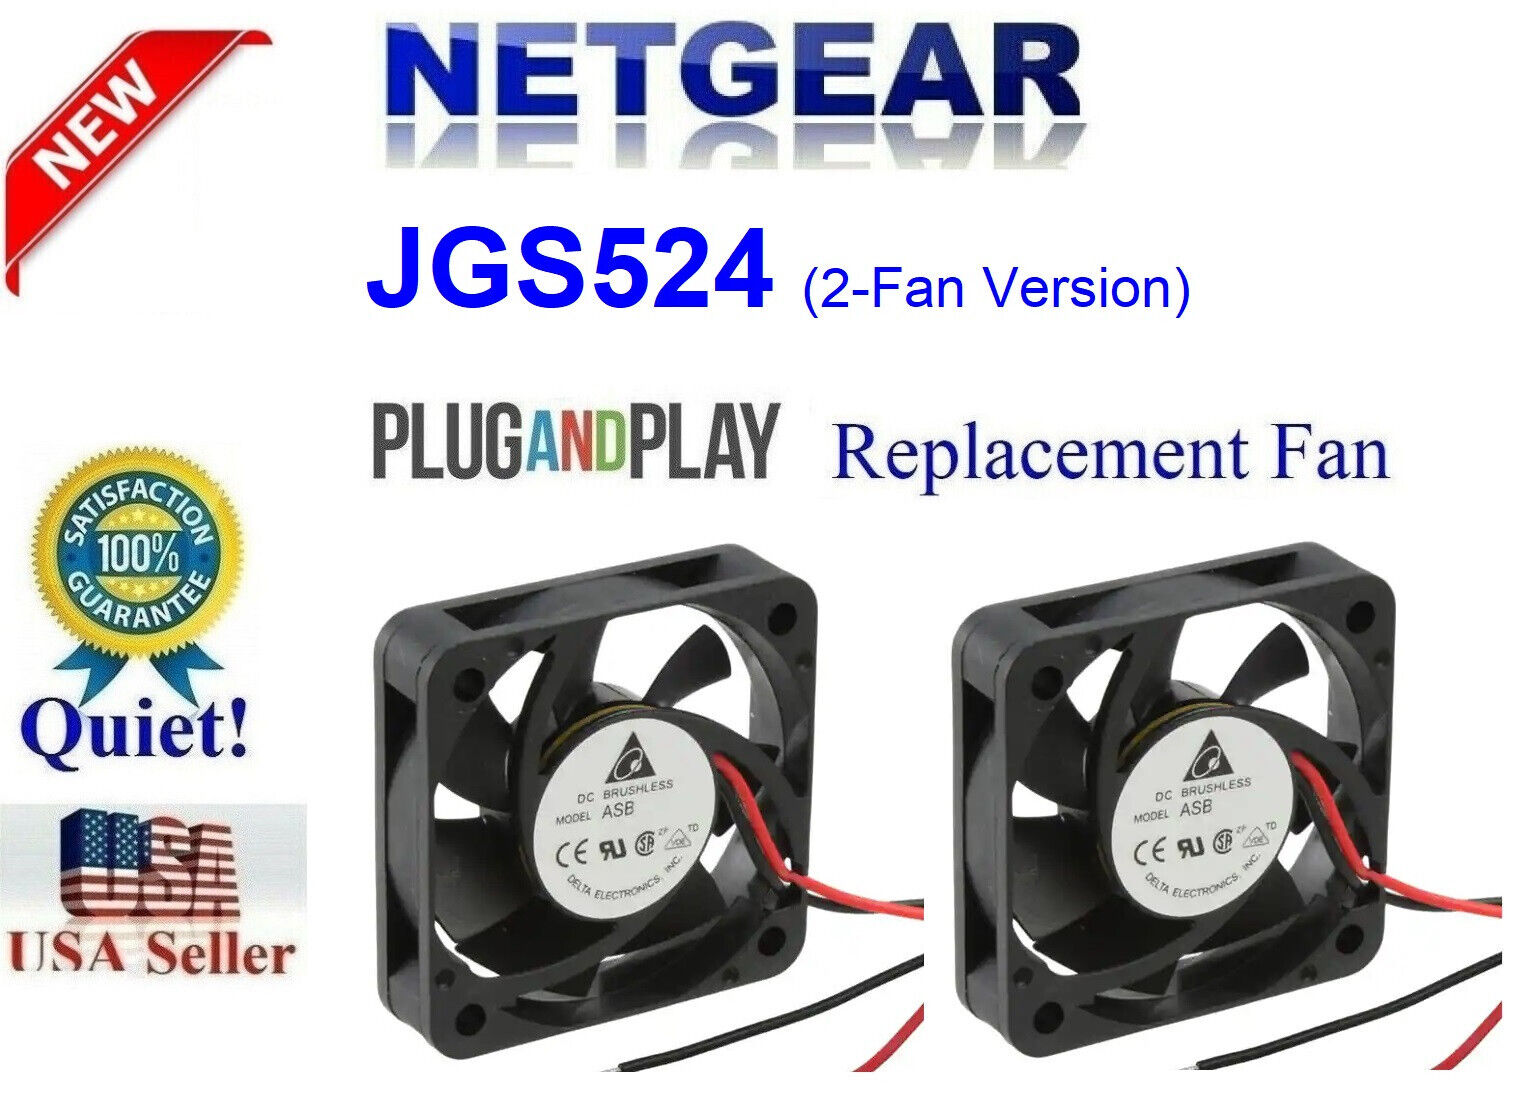 2 Pack Quiet Replacement Fans for Netgear JGS524 (2-Fan Version)